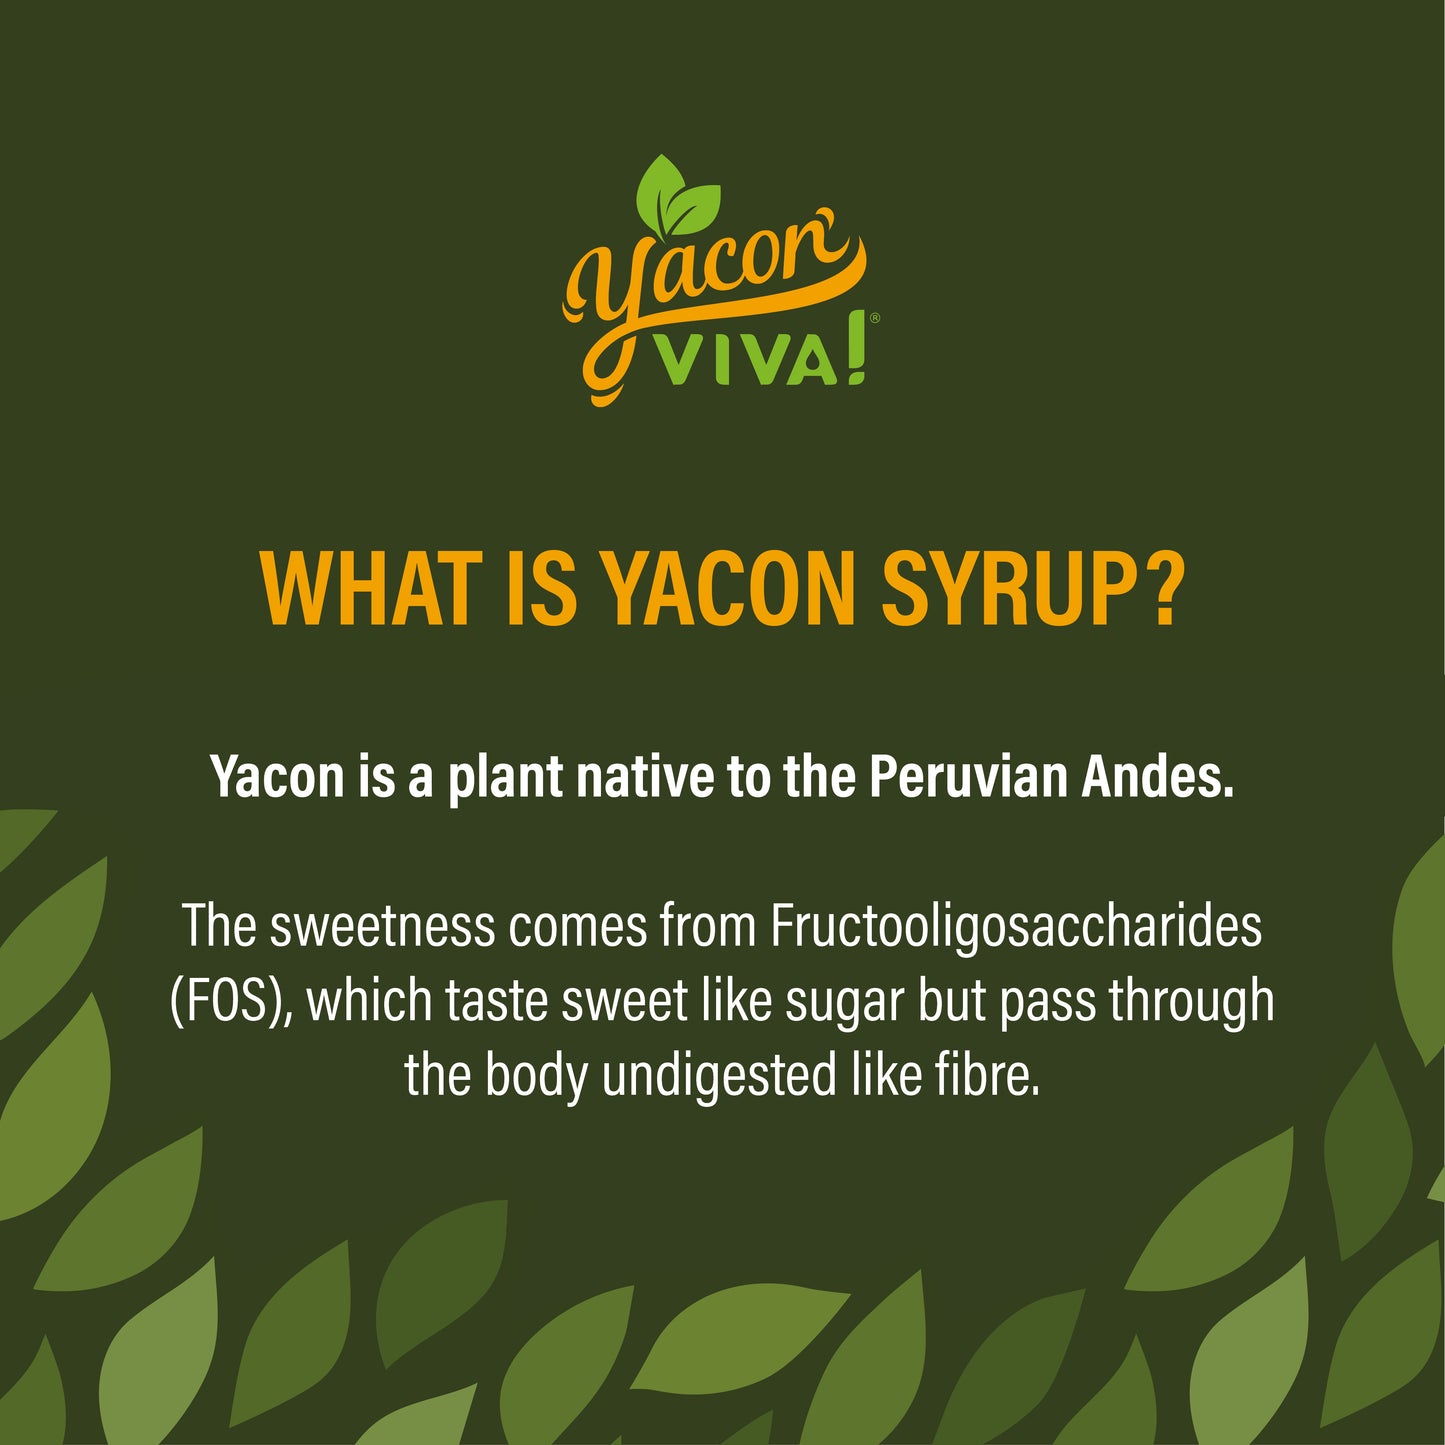 YaconViva! Organic Peruvian Yacon Syrup